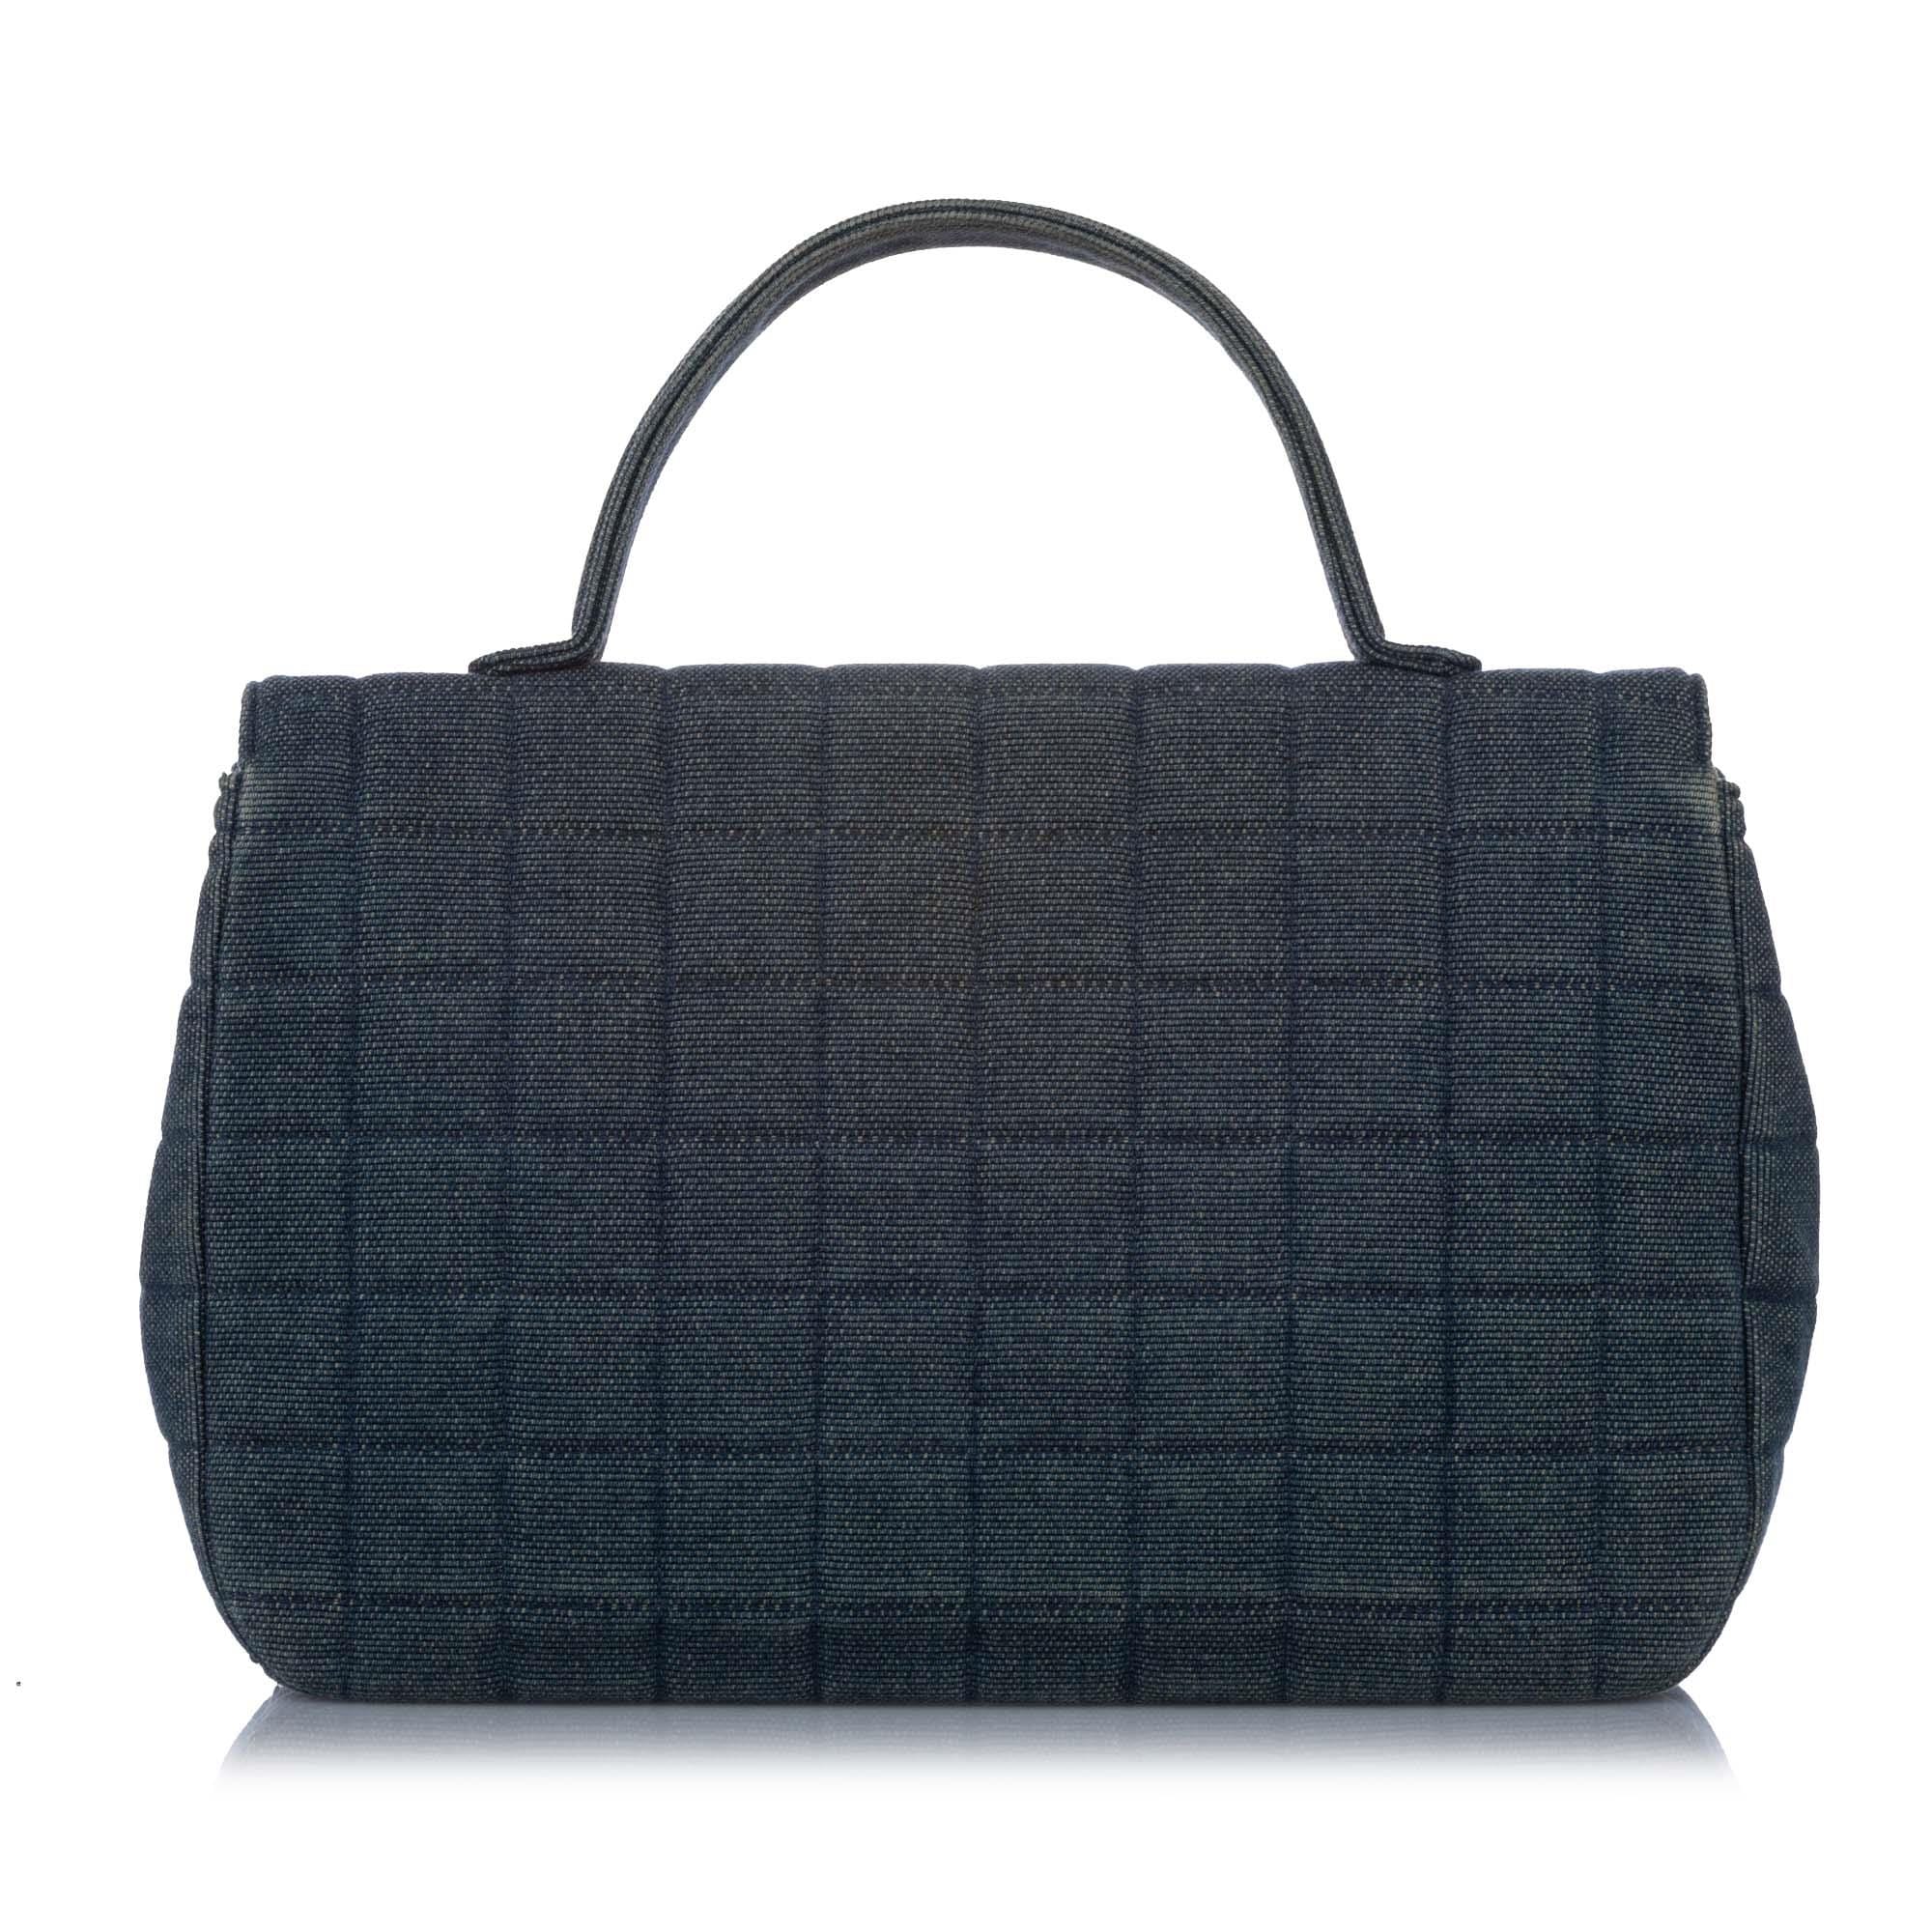 Chanel AUCTION Chanel Denim choco Bar quilted Handbag NW5321